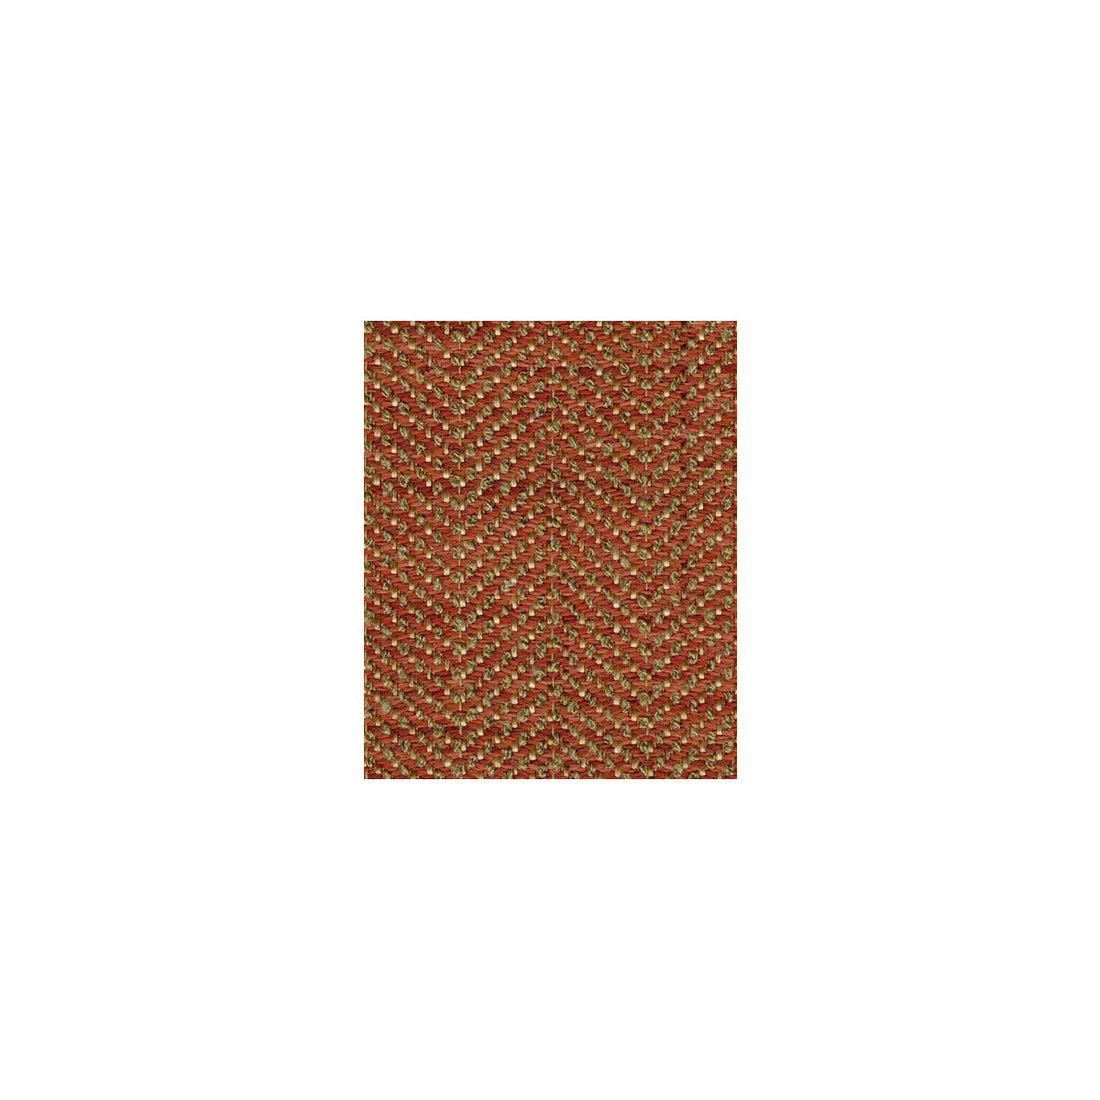 Kravet Smart fabric in 30666-312 color - pattern 30666.312.0 - by Kravet Smart